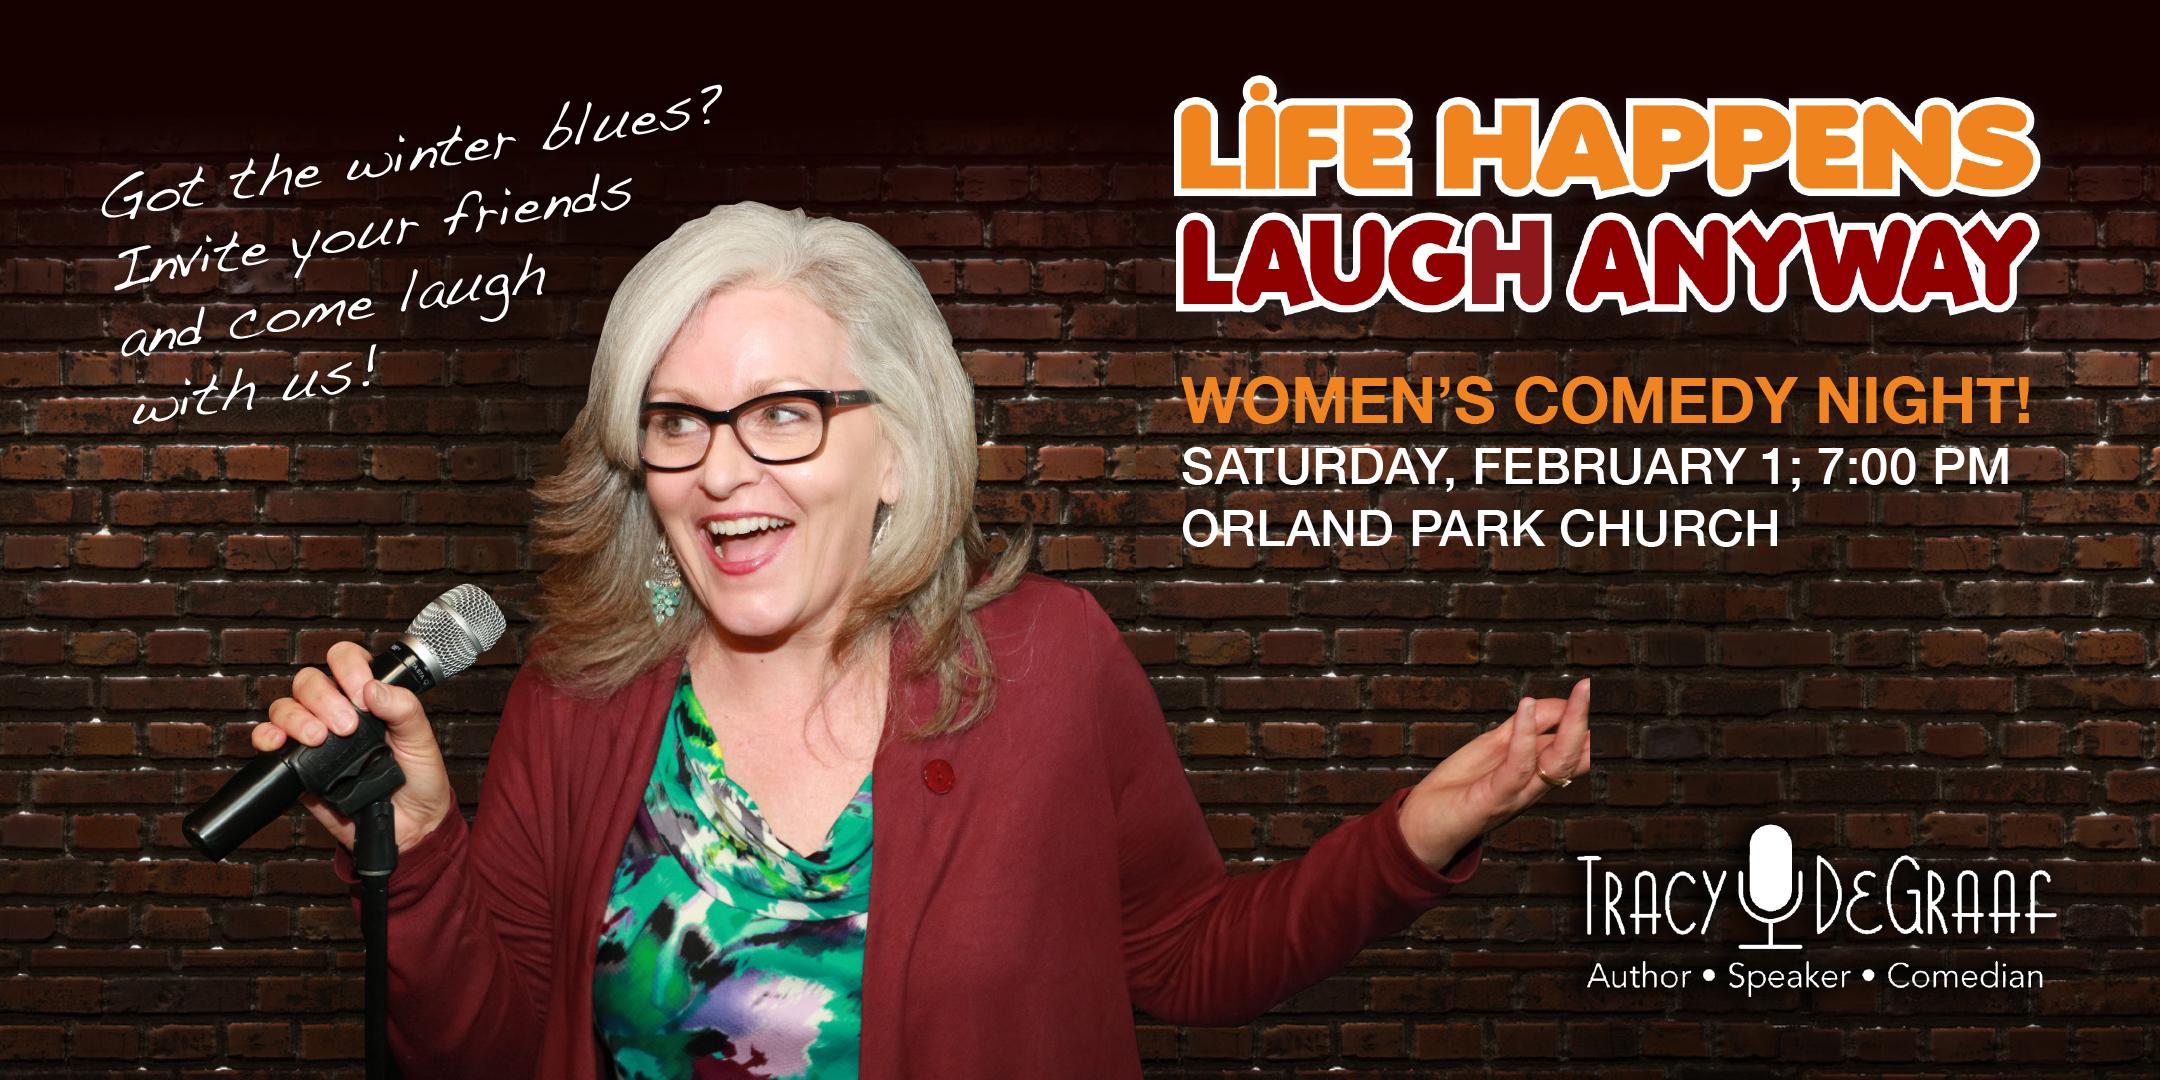 Women's Comedy Night!